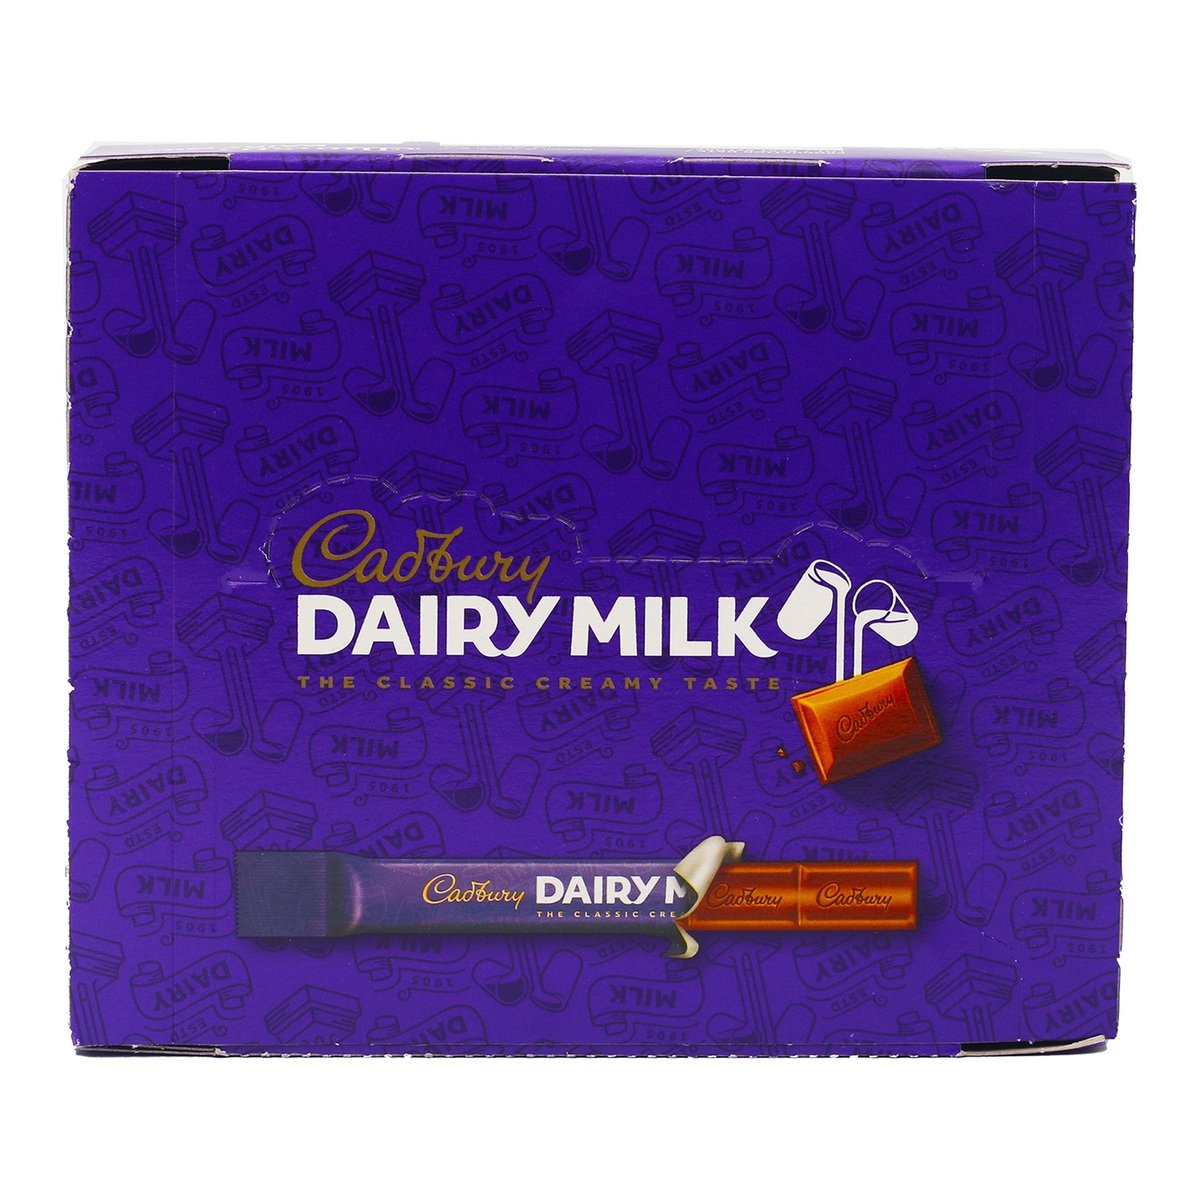 Cadbury Dairy Milk 10 g